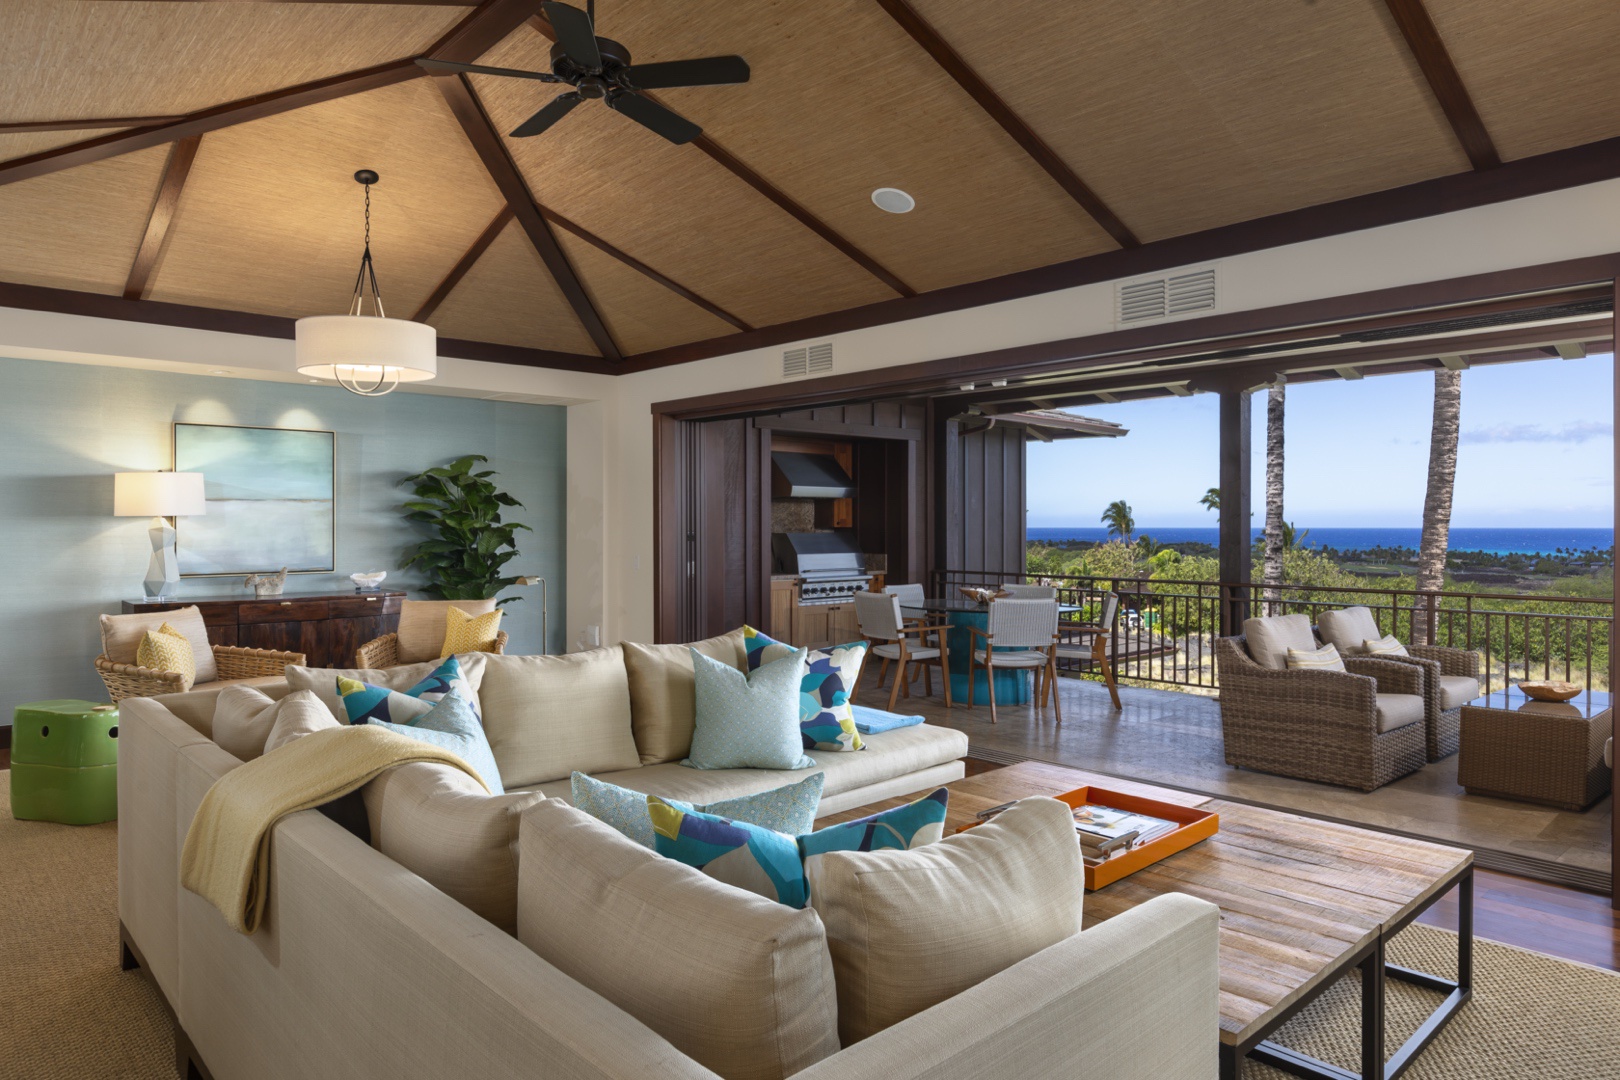 Kailua Kona Vacation Rentals, 3BD Hali'ipua Villa (108) at Four Seasons Resort at Hualalai - Decadent and incredibly comfortable couch, vaulted ceilings and epic views.